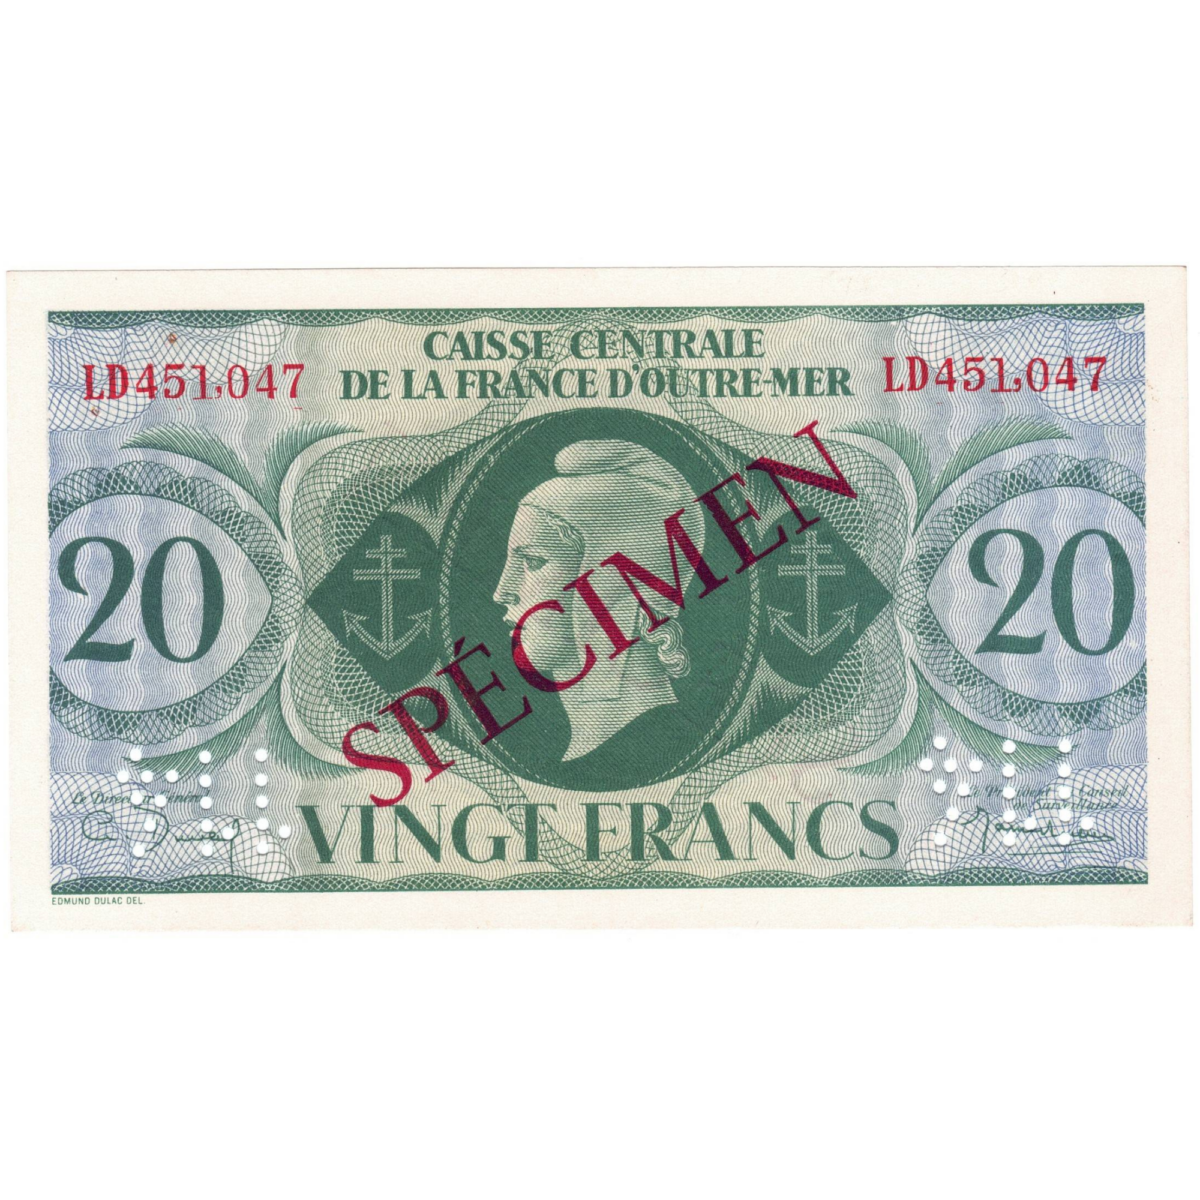 outre mer 20 francs specimen 1941 avers 028